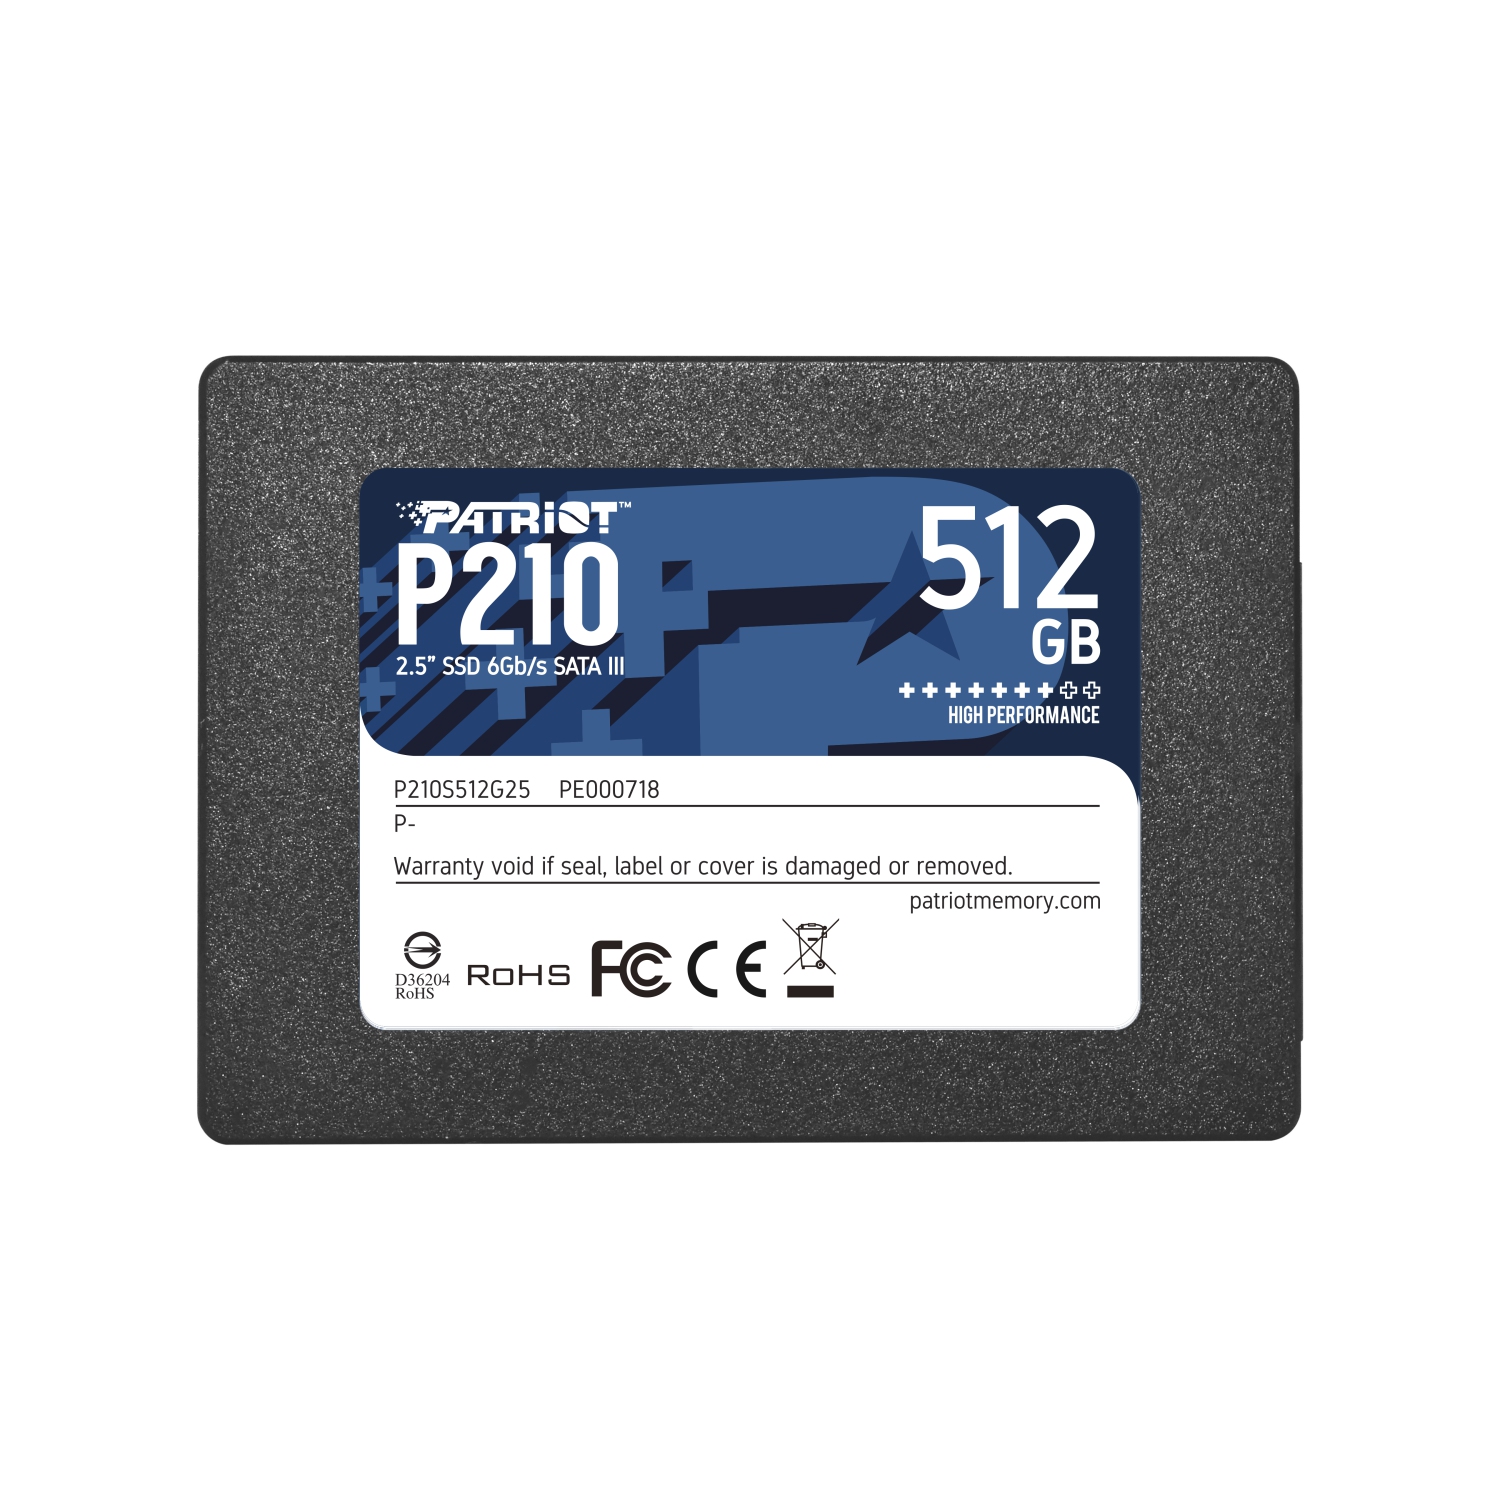 Patriot P210 512GB Internal SSD - SATA 3 2.5" - Solid State Drive - P210S512G25